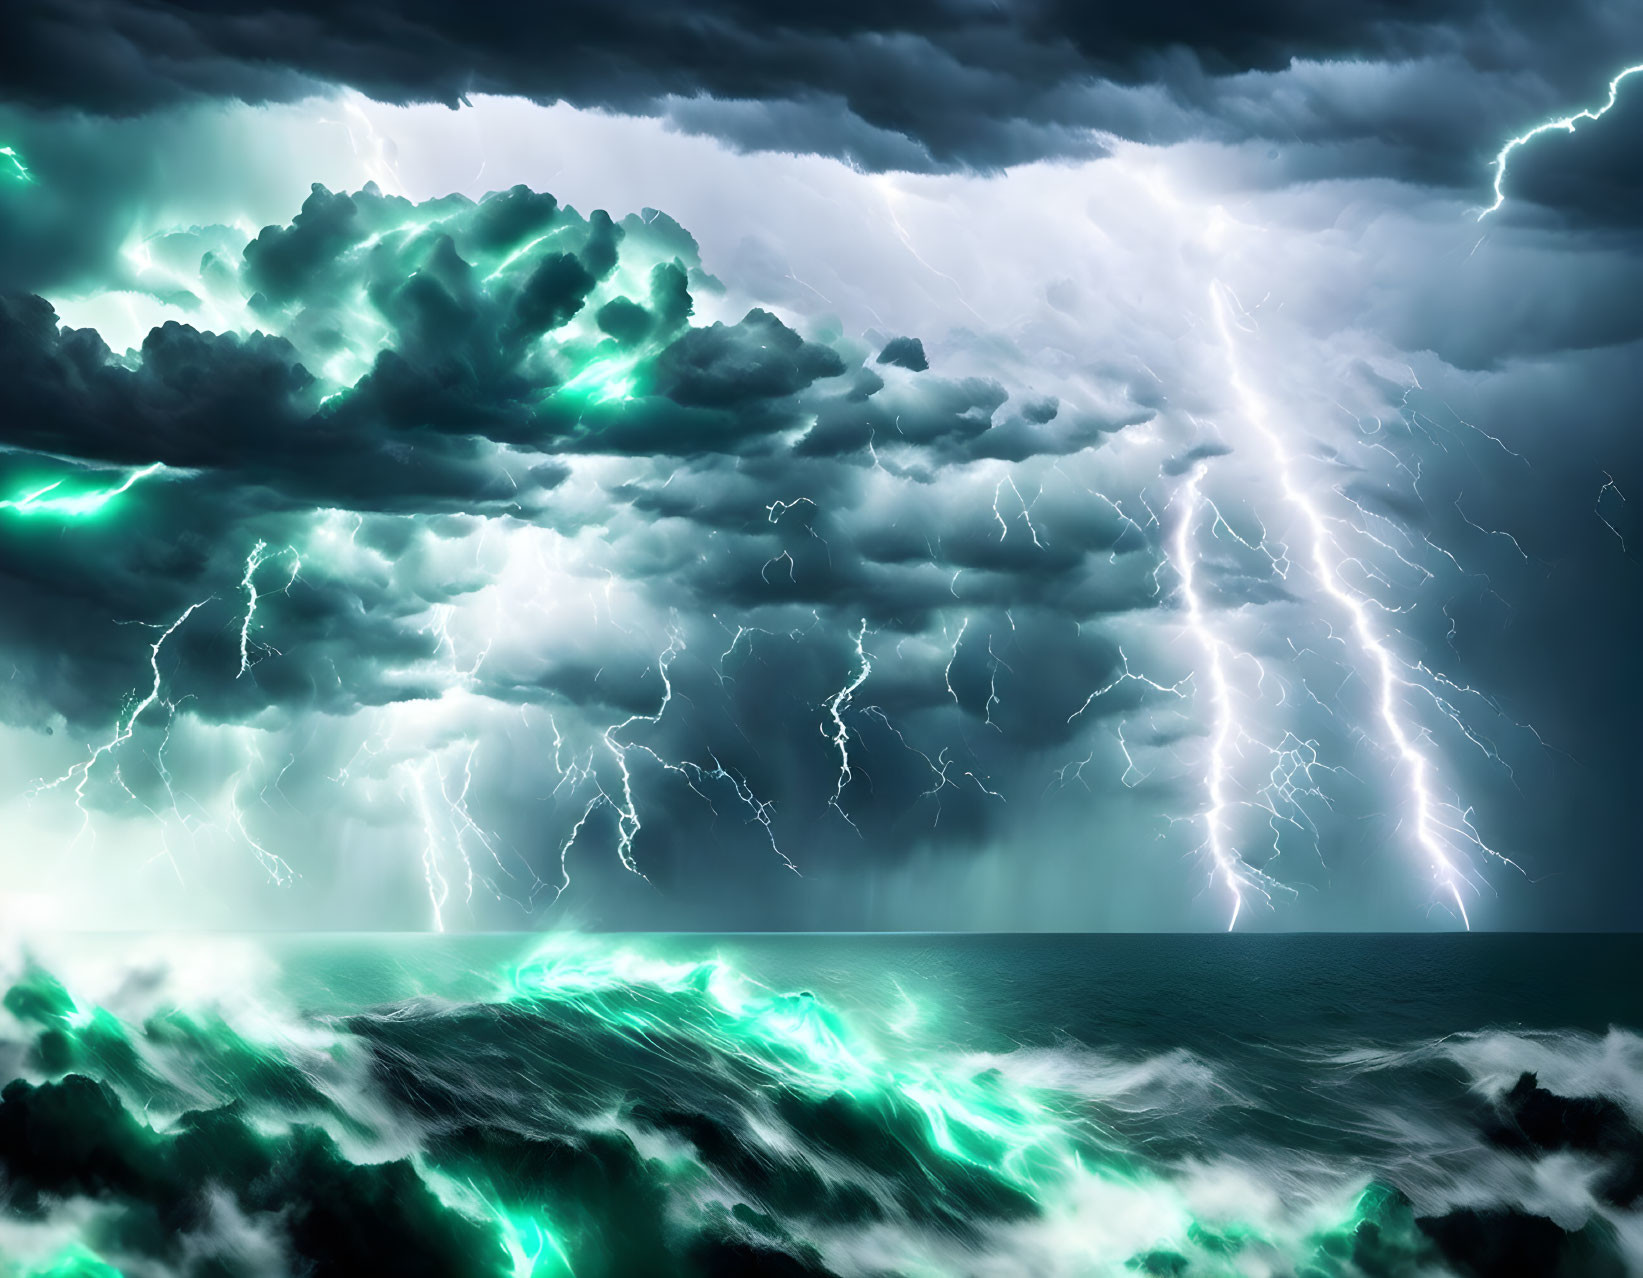 Luminous green waves in fierce lightning storm